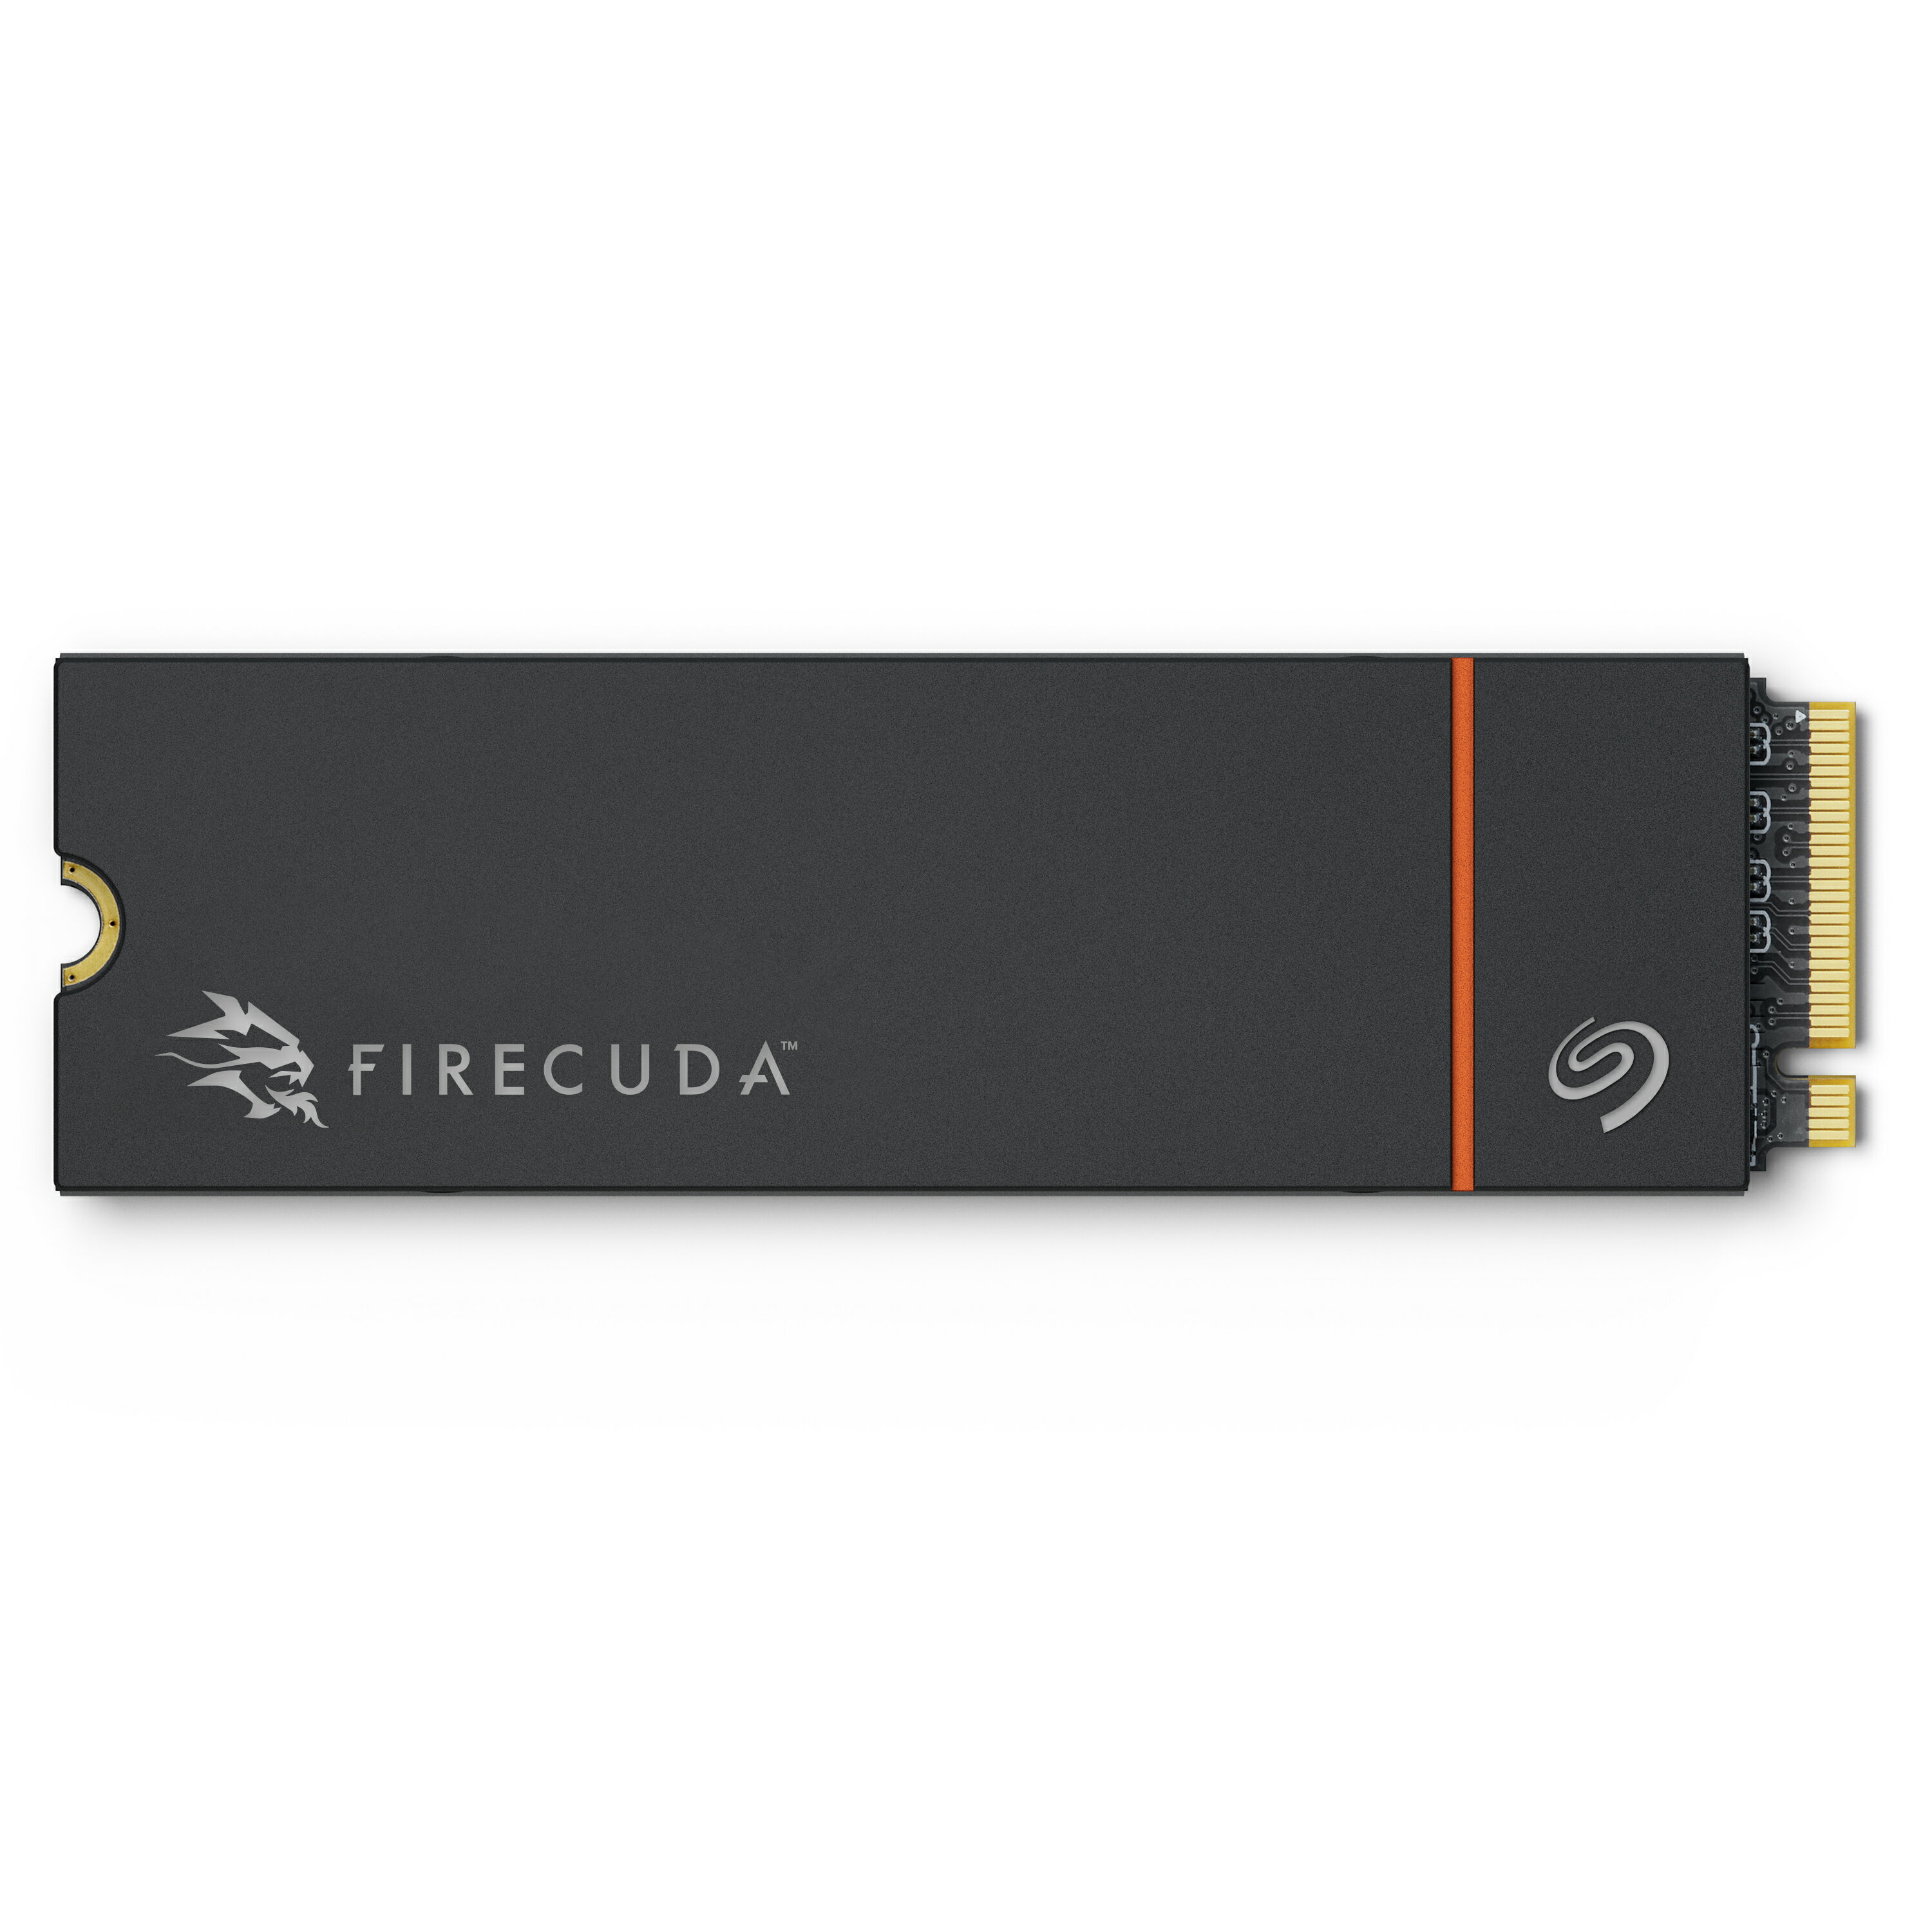 Seagate シーゲイト FireCuda 530 M.2 内蔵 SSD ヒートシンク付き 【PS5 動作確認済み】 1TB PCIe Gen4 x4 読取速度 …